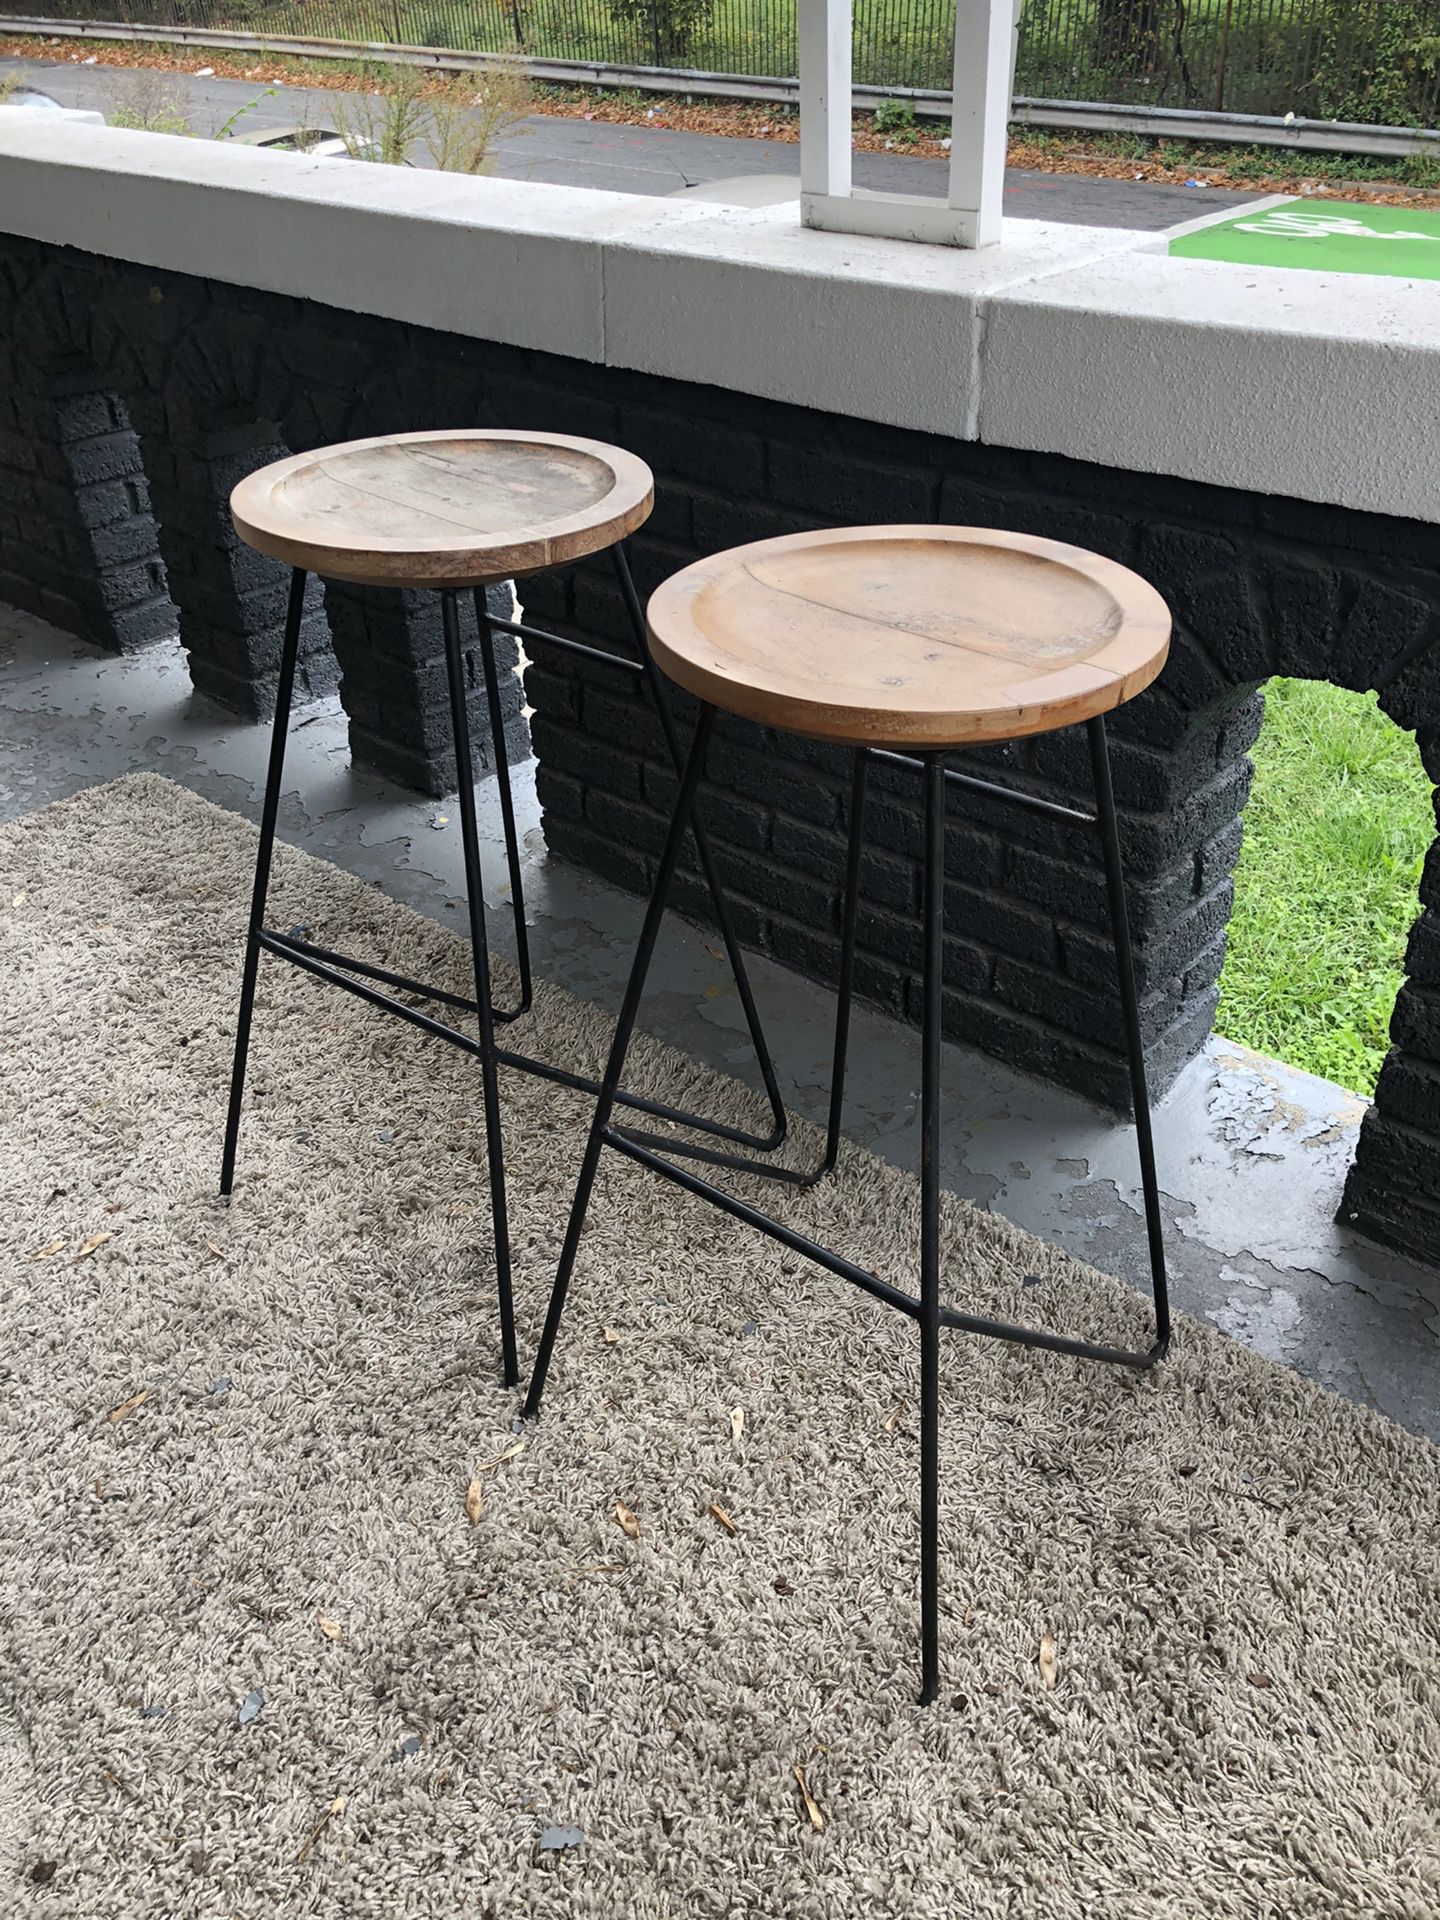 Wrought iron bar stools (2)